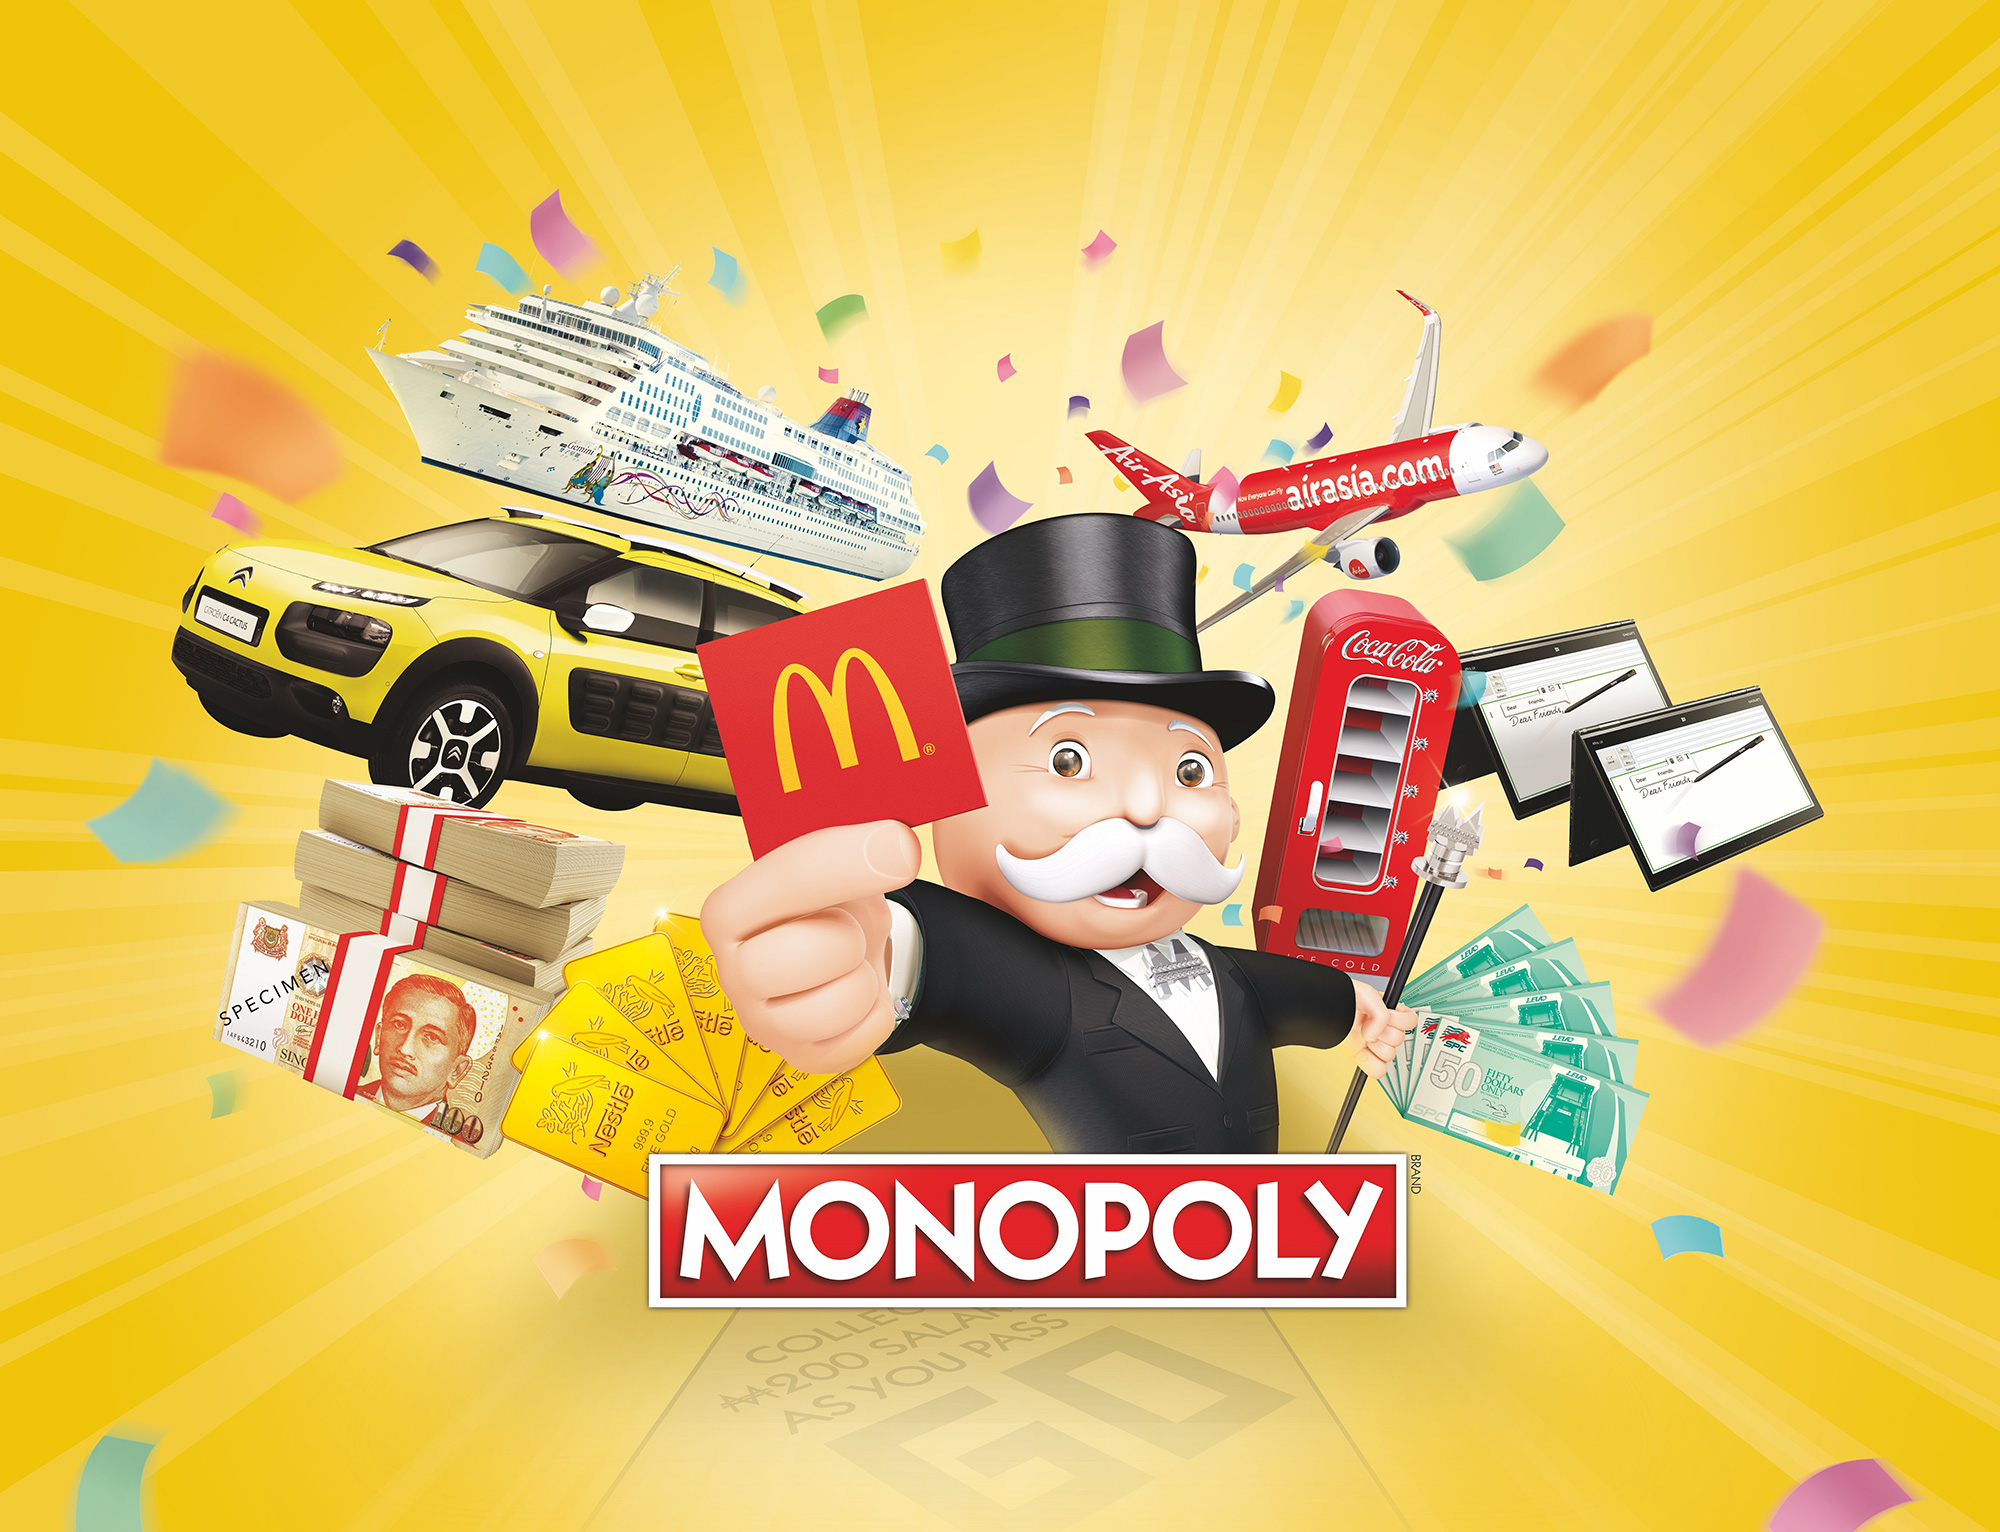 monopoly-game-at-mcdonalds